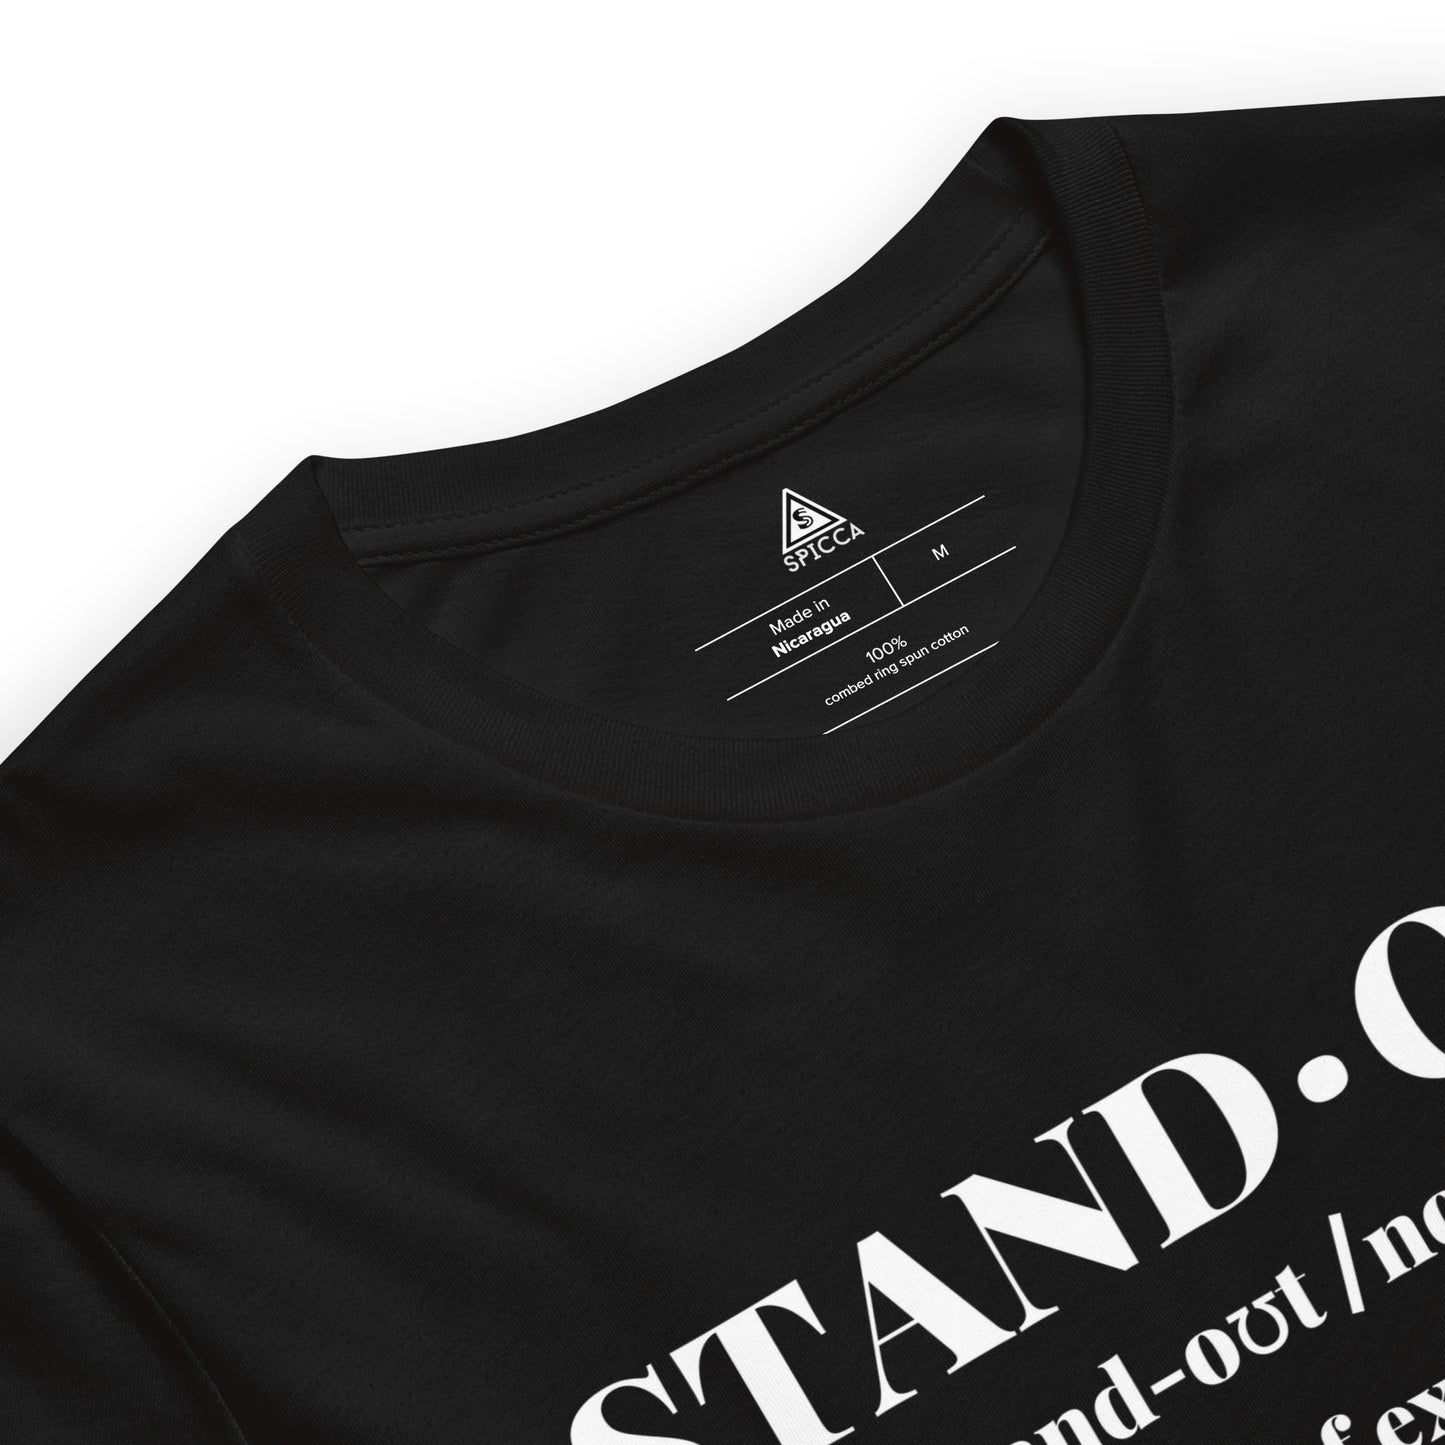 Standout Definition Short-Sleeve Unisex T-Shirt